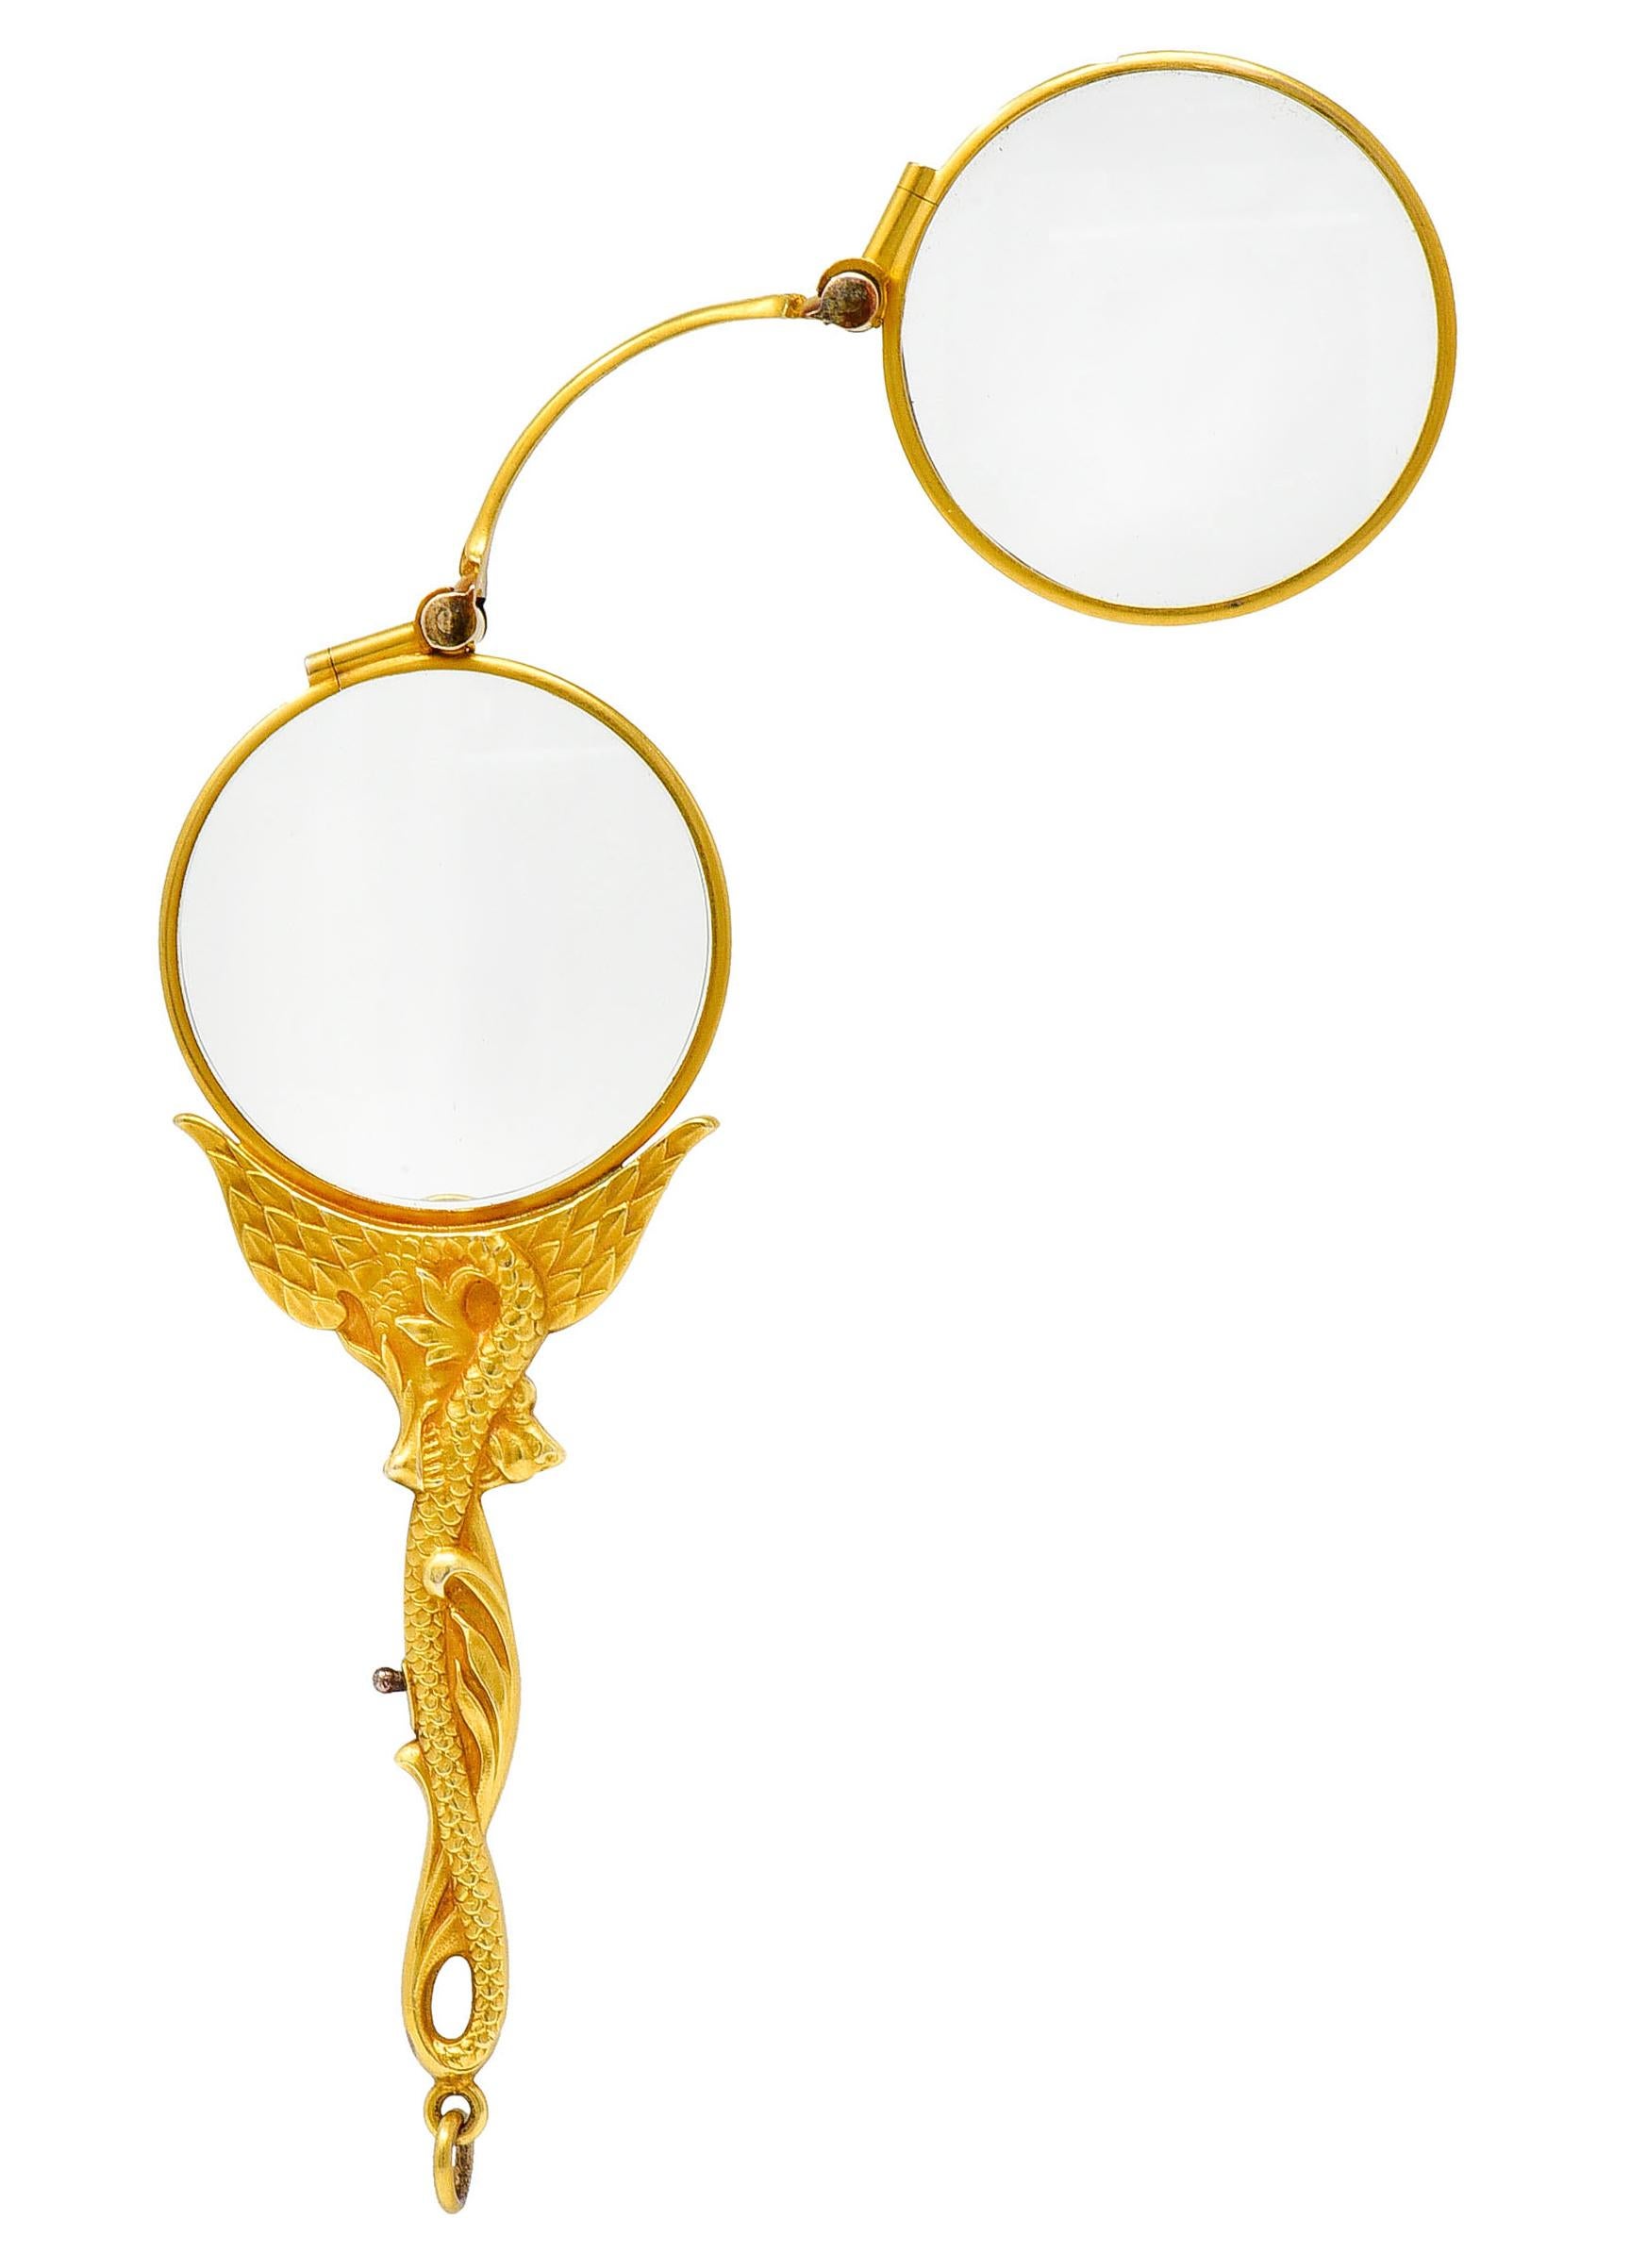 J. Solinger & Co. 14 Karat Gold Serpent Dragon Lorgnette Glasses Pendant 2